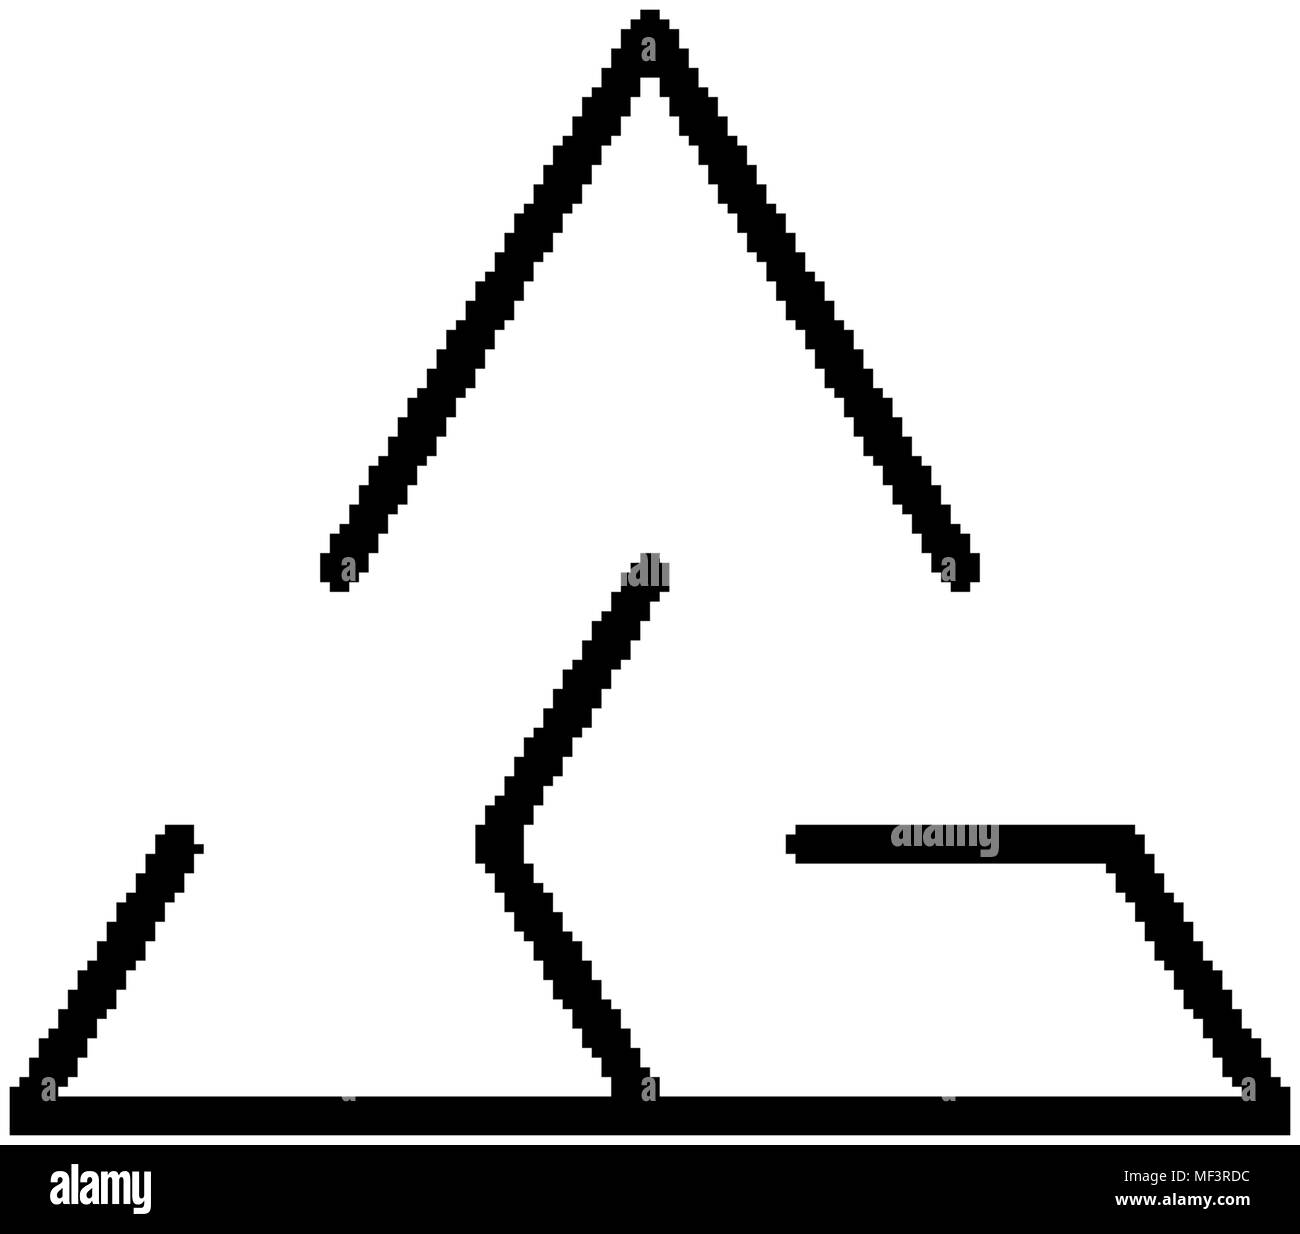 Lineart maze logo design. Black triangular simple intricacy illustration Stock Vector